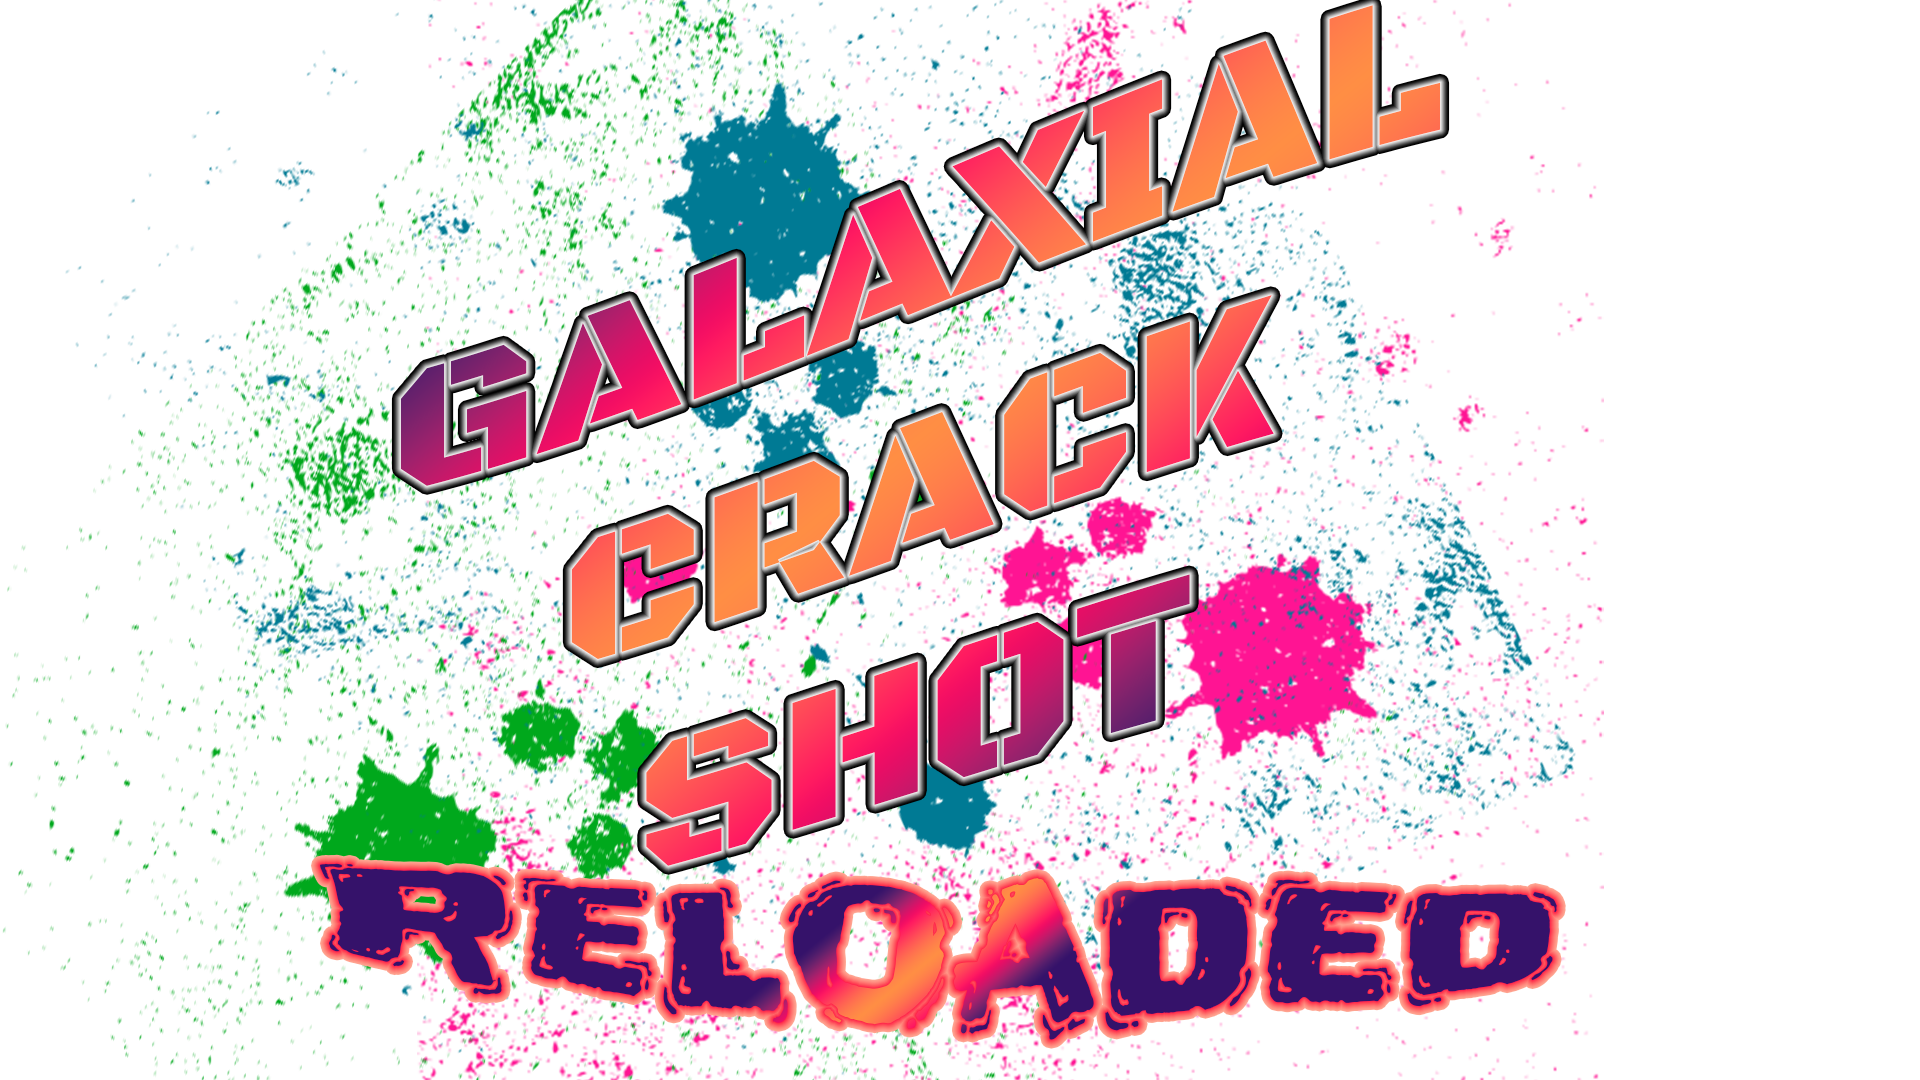 Galaxial Crack Shot: Reloaded